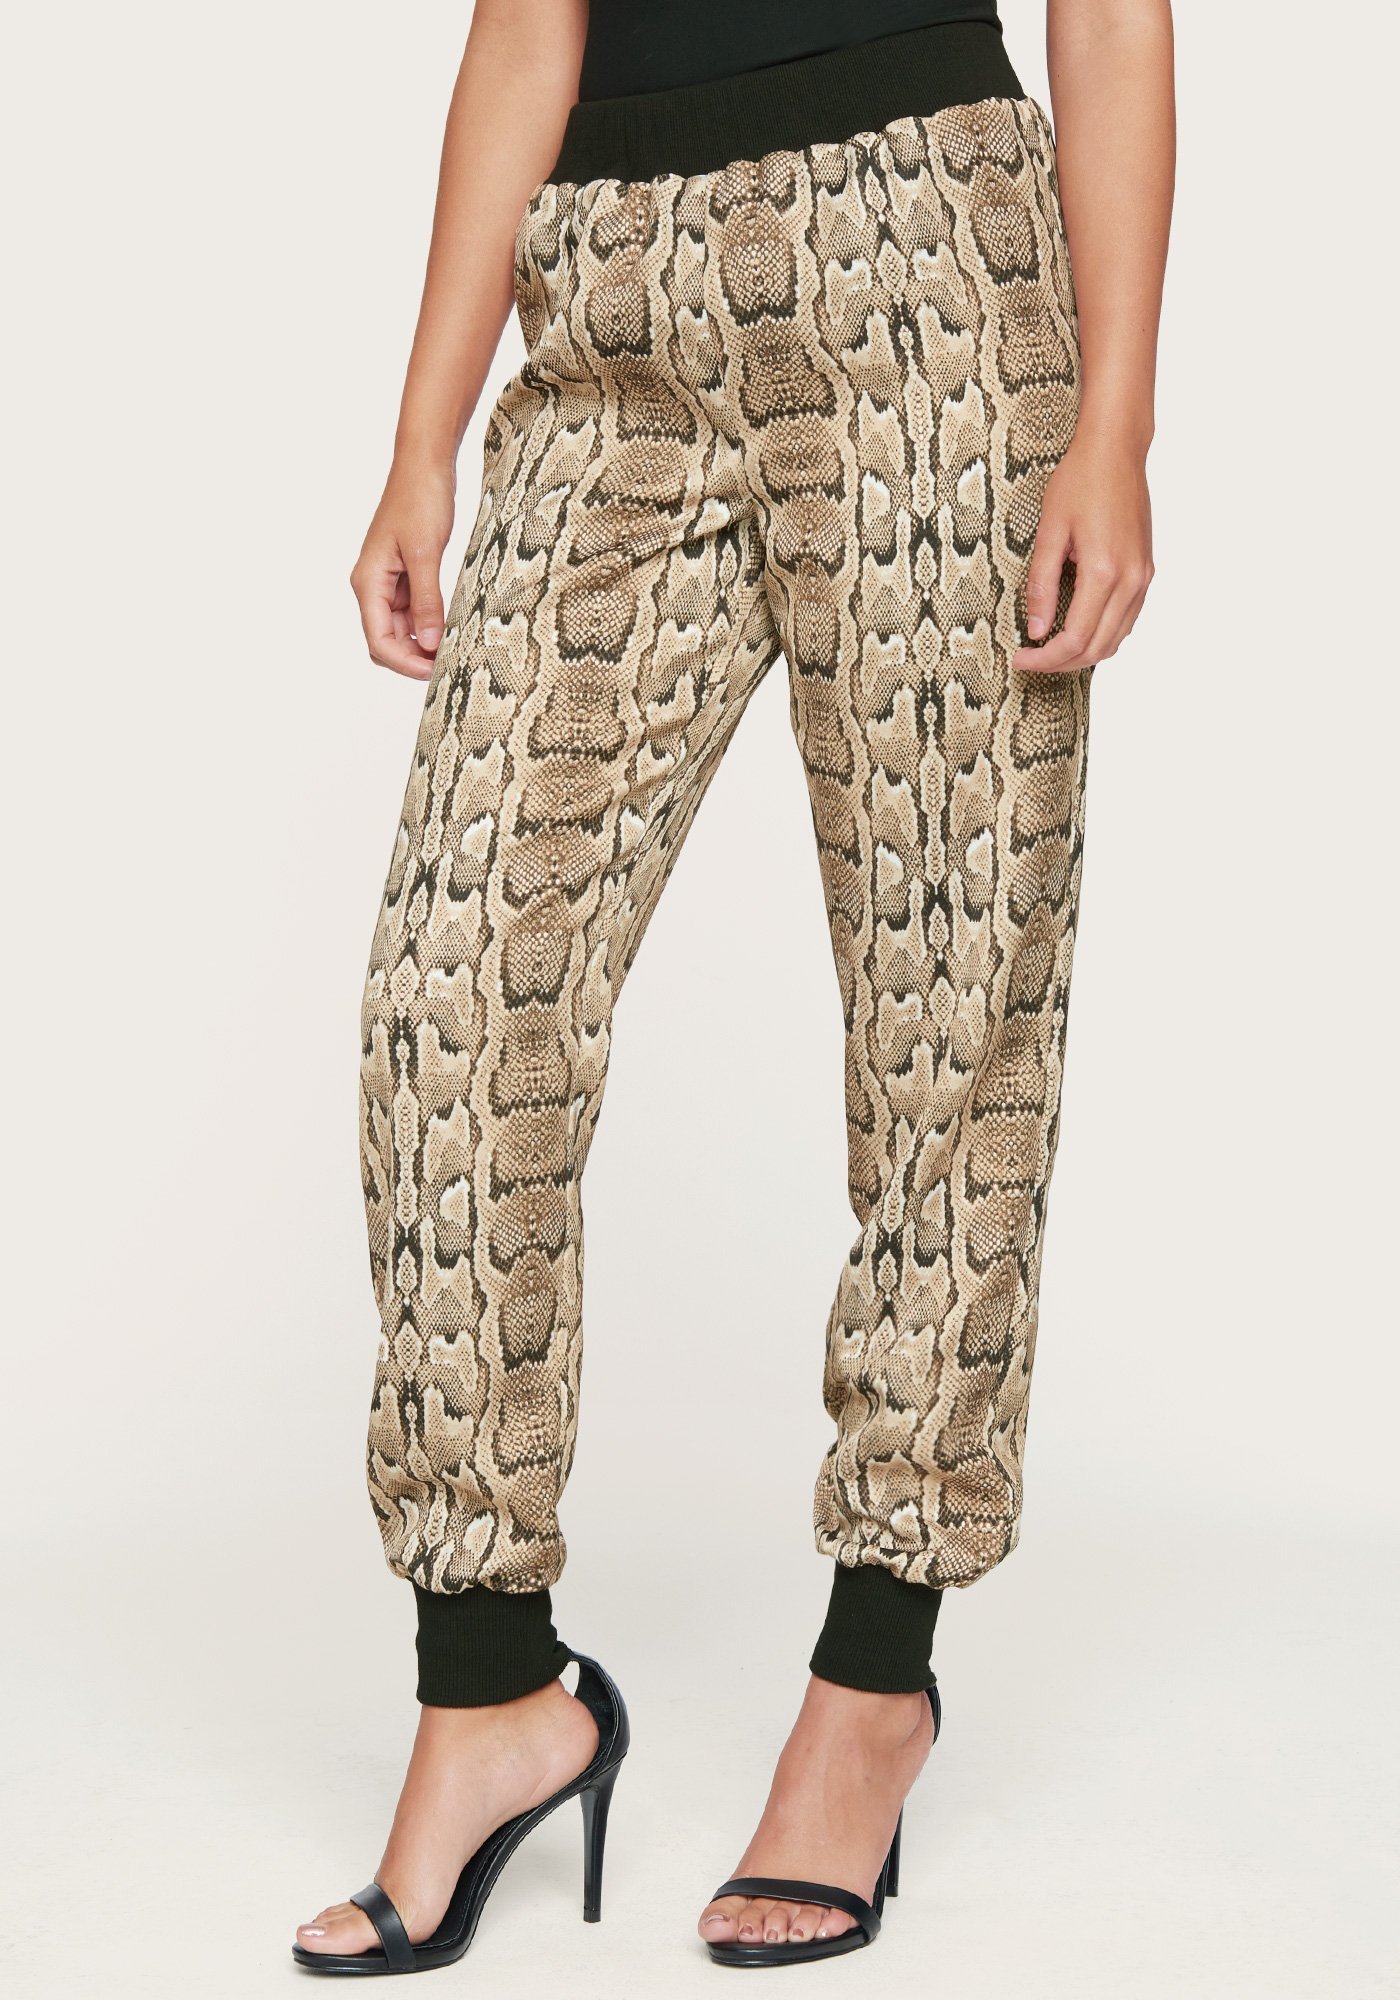 Bebe Women's Print Jogger Pant, Size XL in Camel Snakeskin Polyester